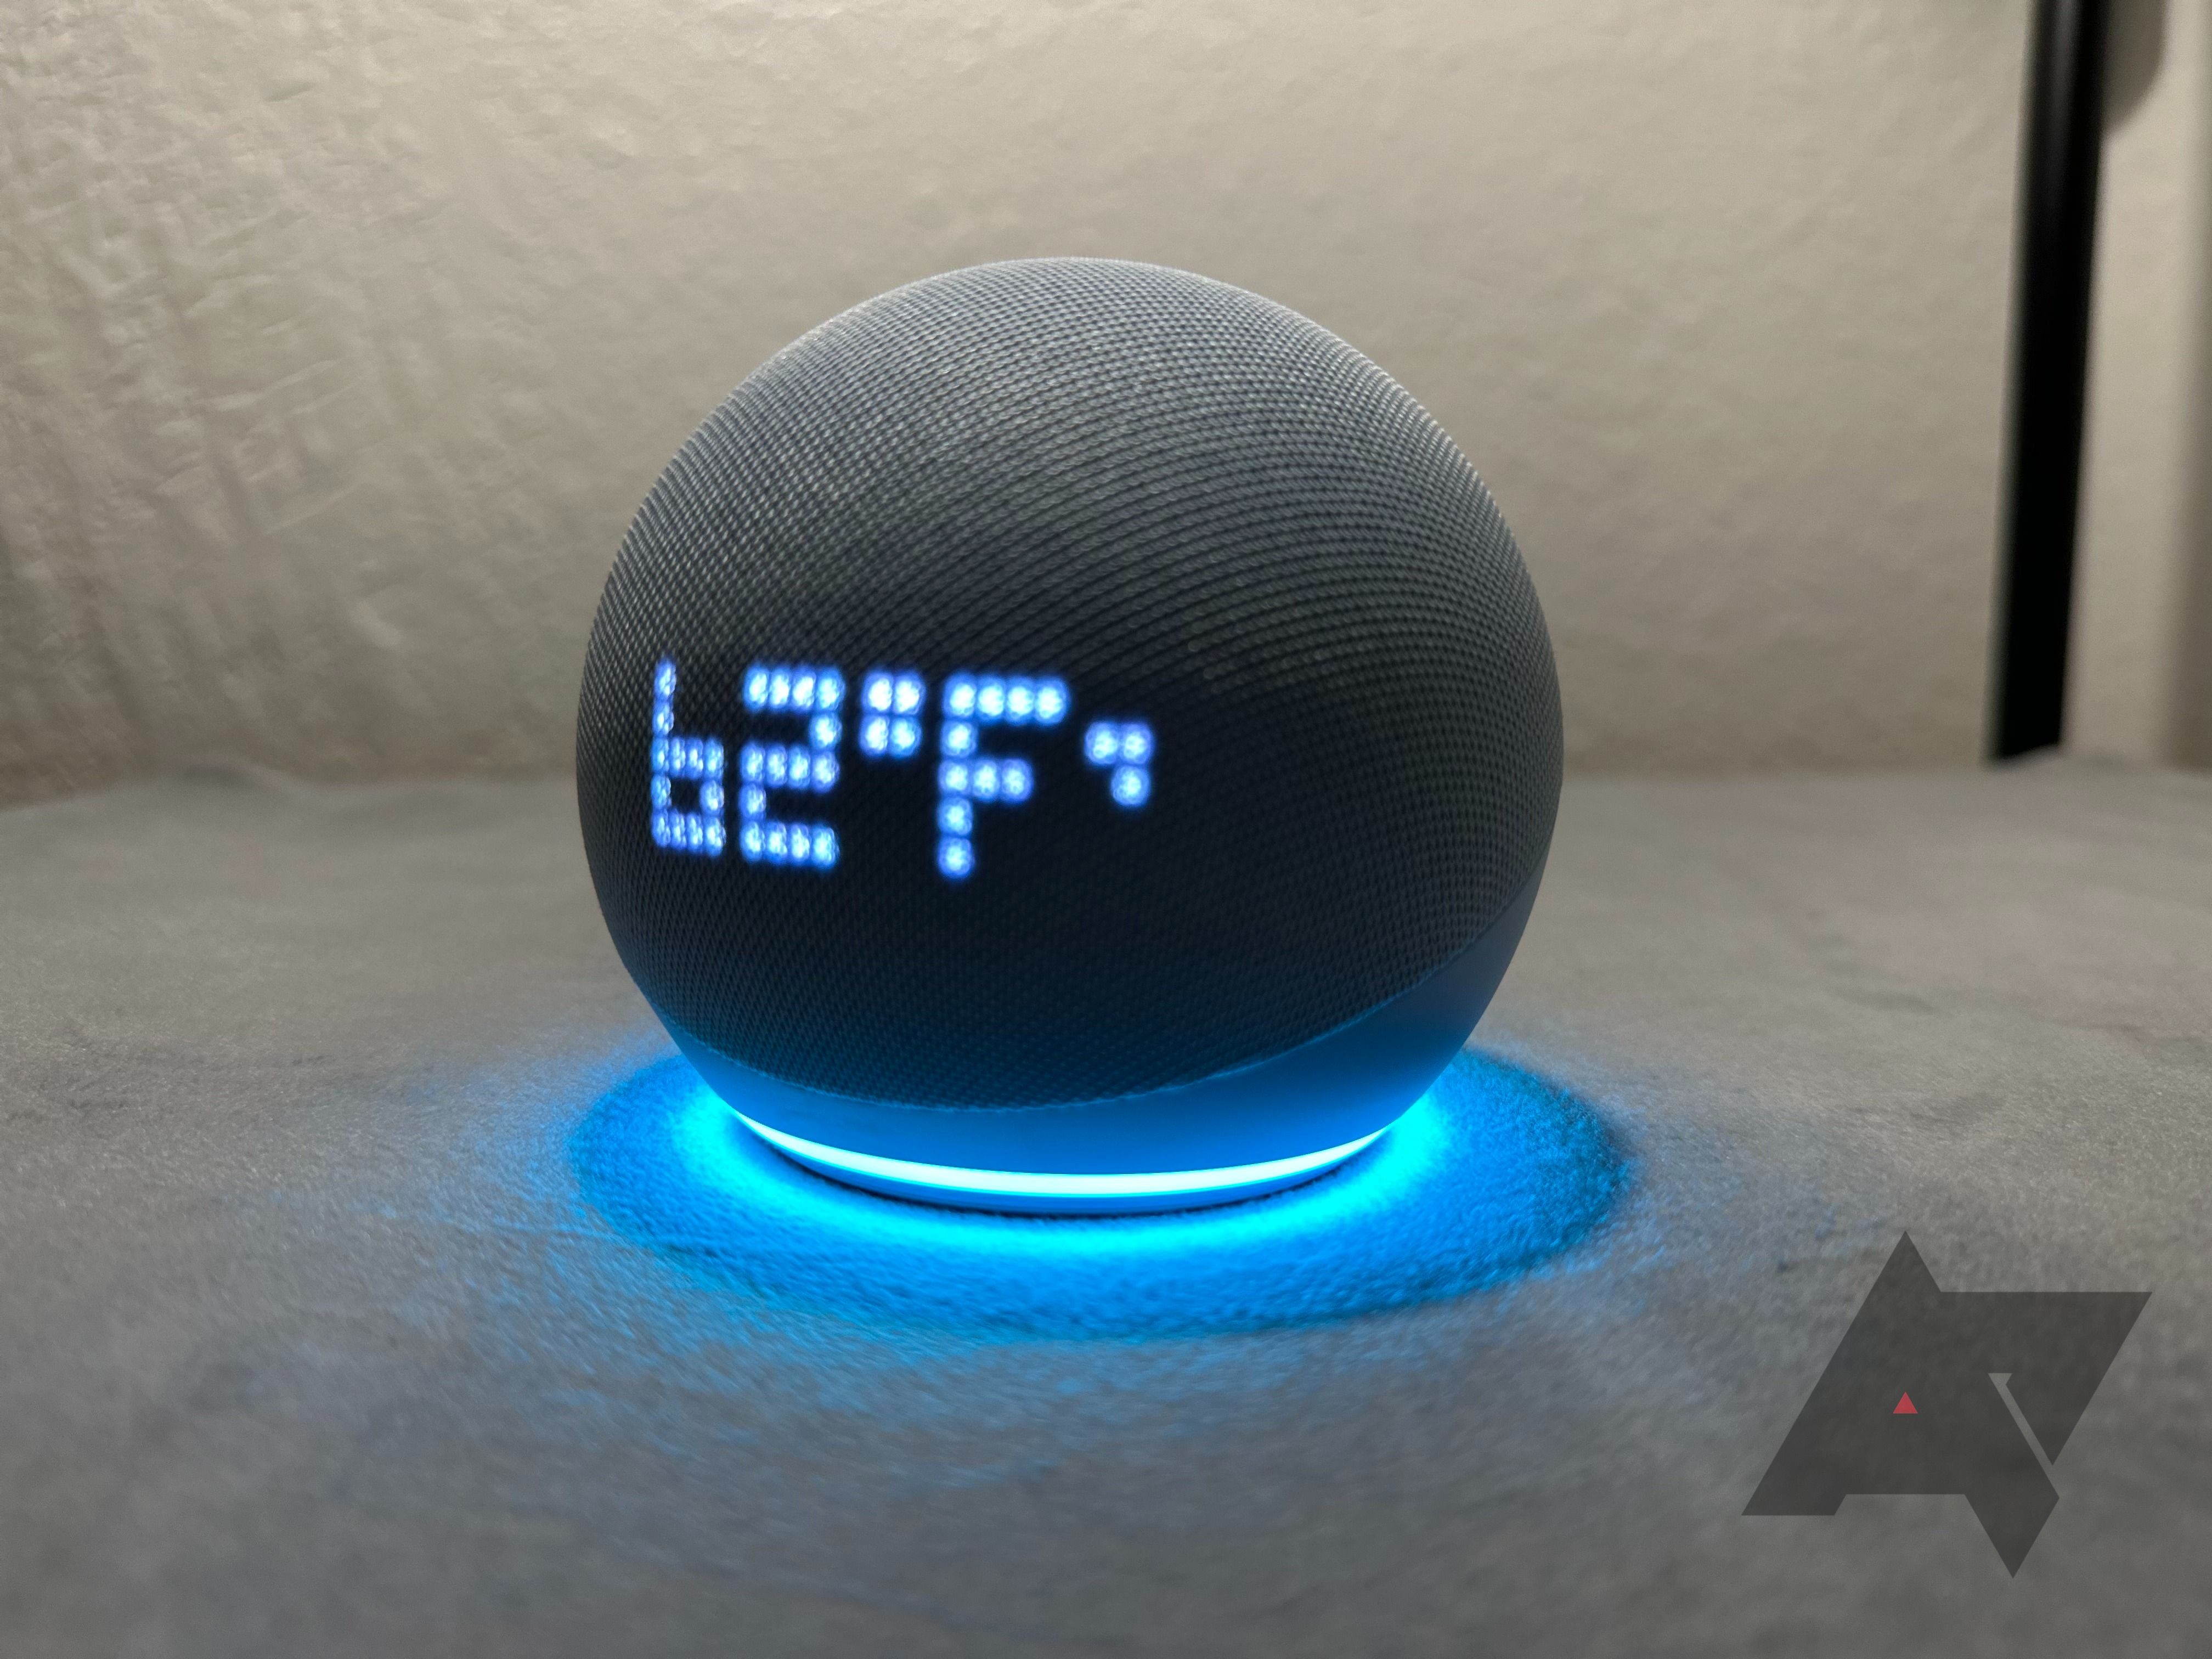 Amazon Echo Dot mostrando a temperatura e uma base iluminada